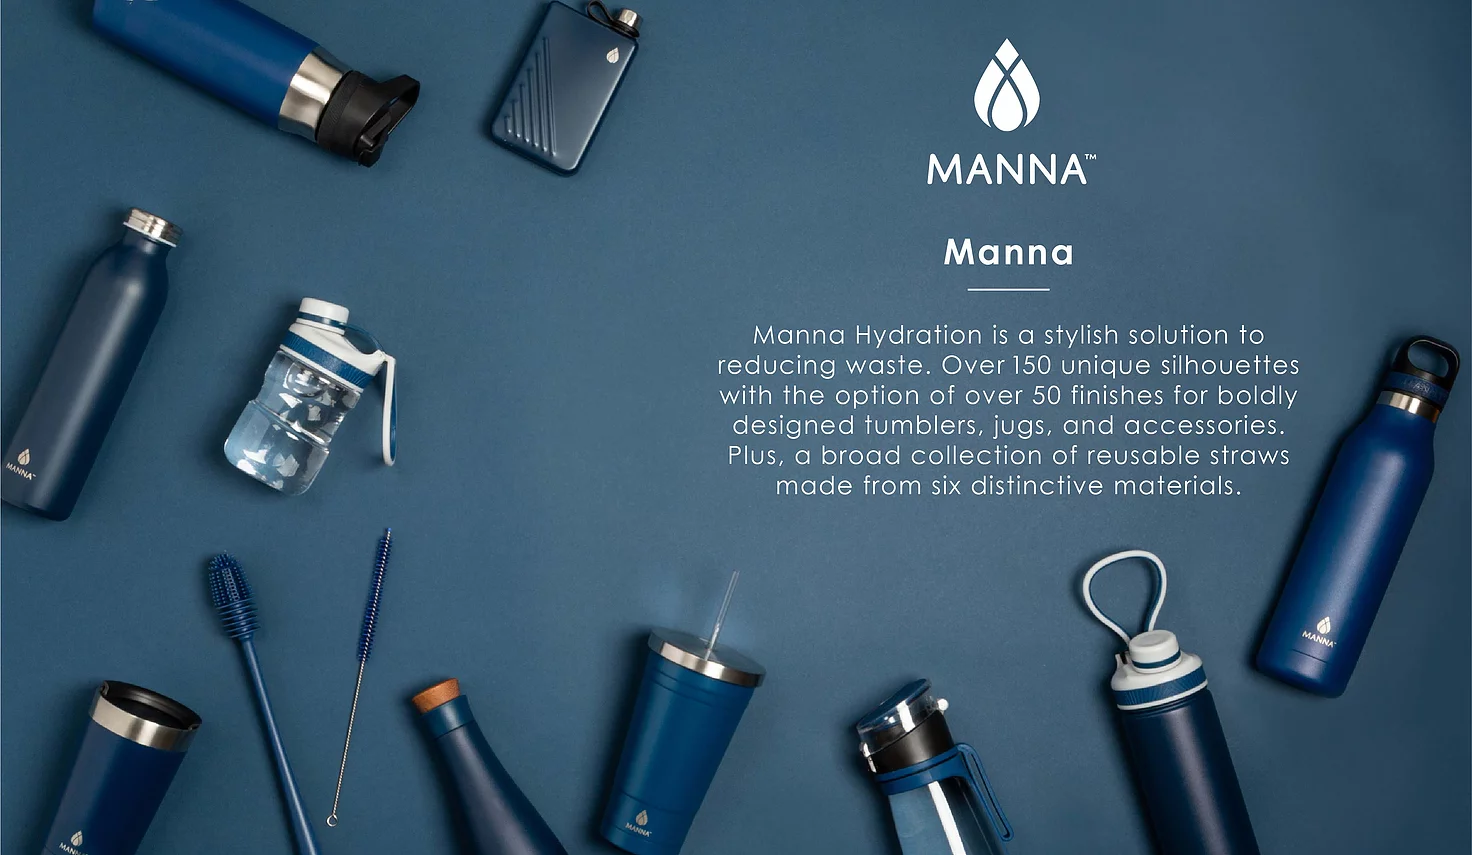 Our_Brand_Manna.jpg